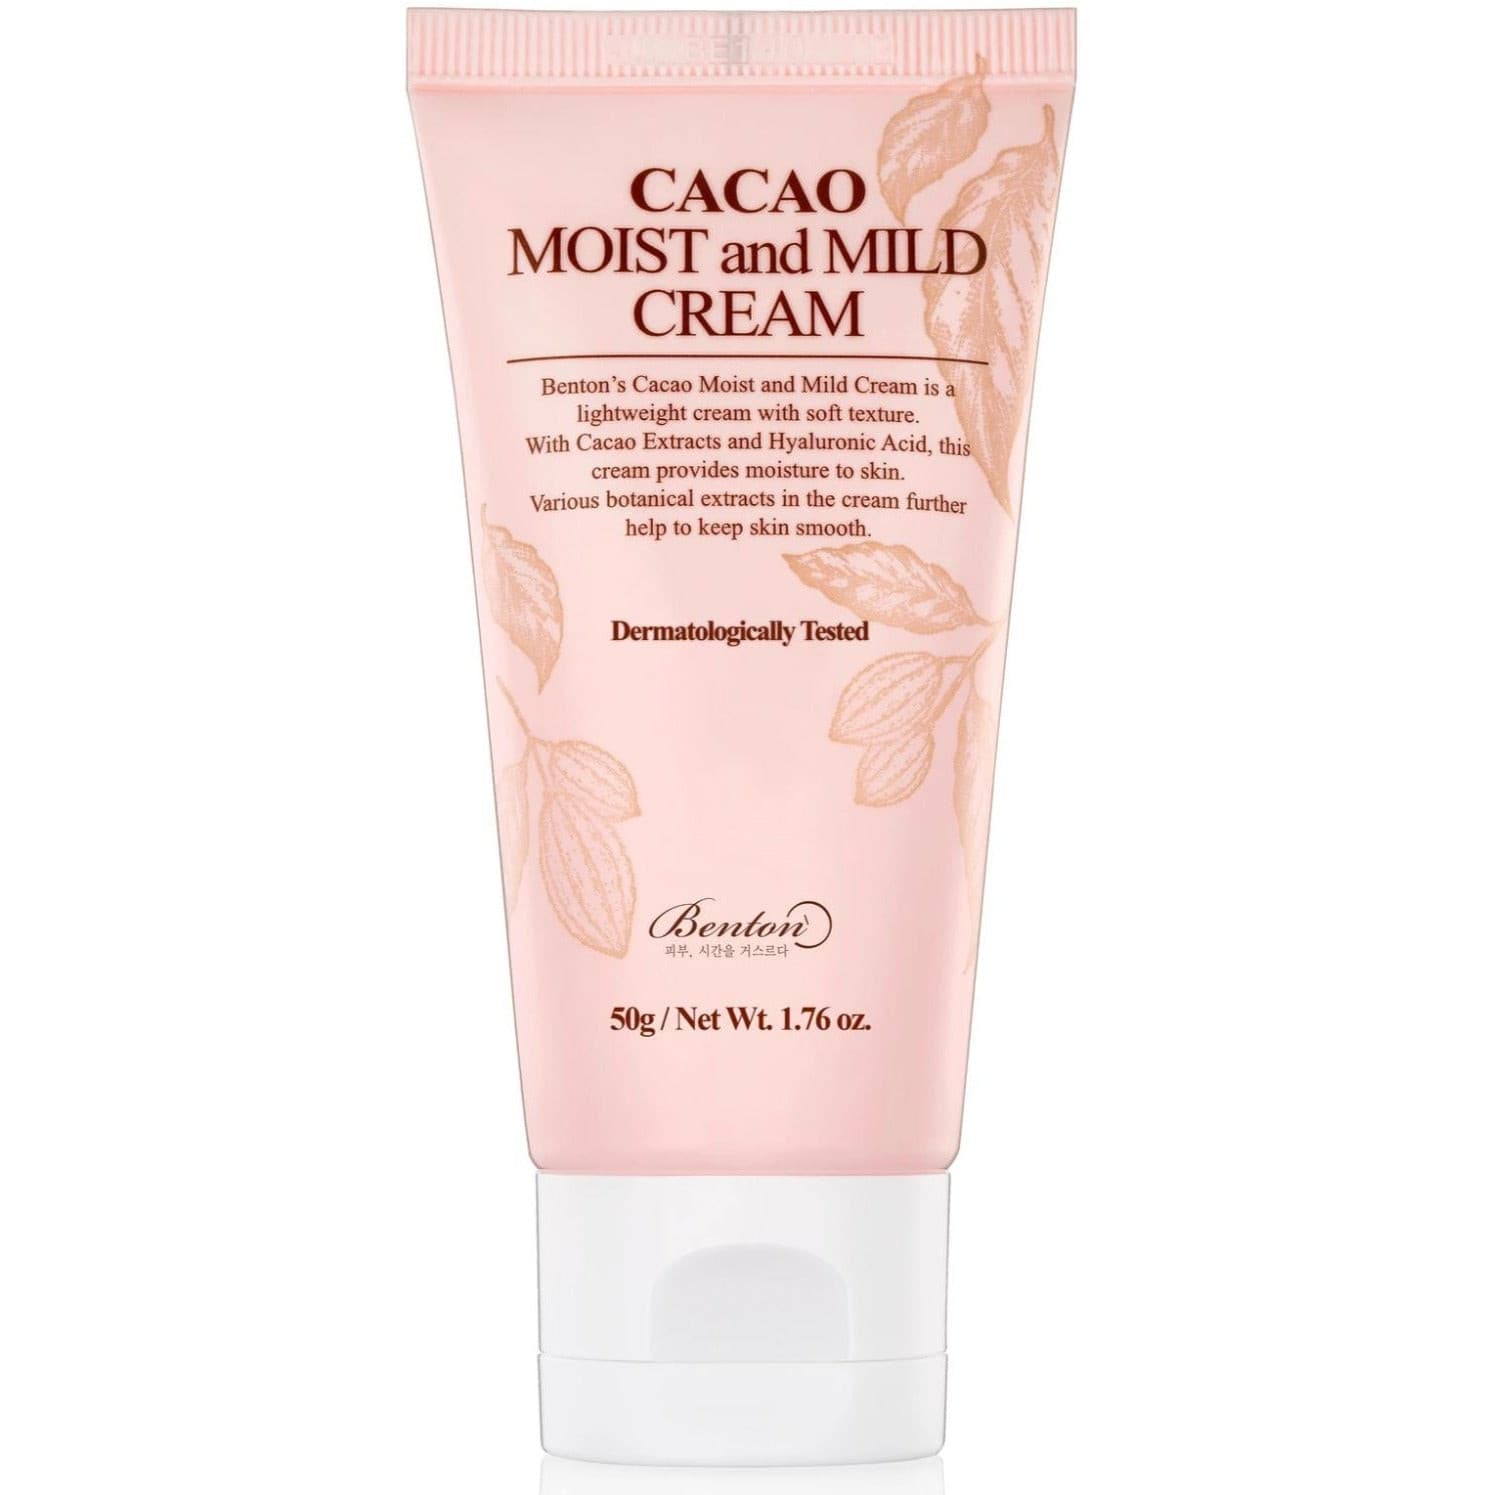 Cacao Moist And Mild Cream - 50g.